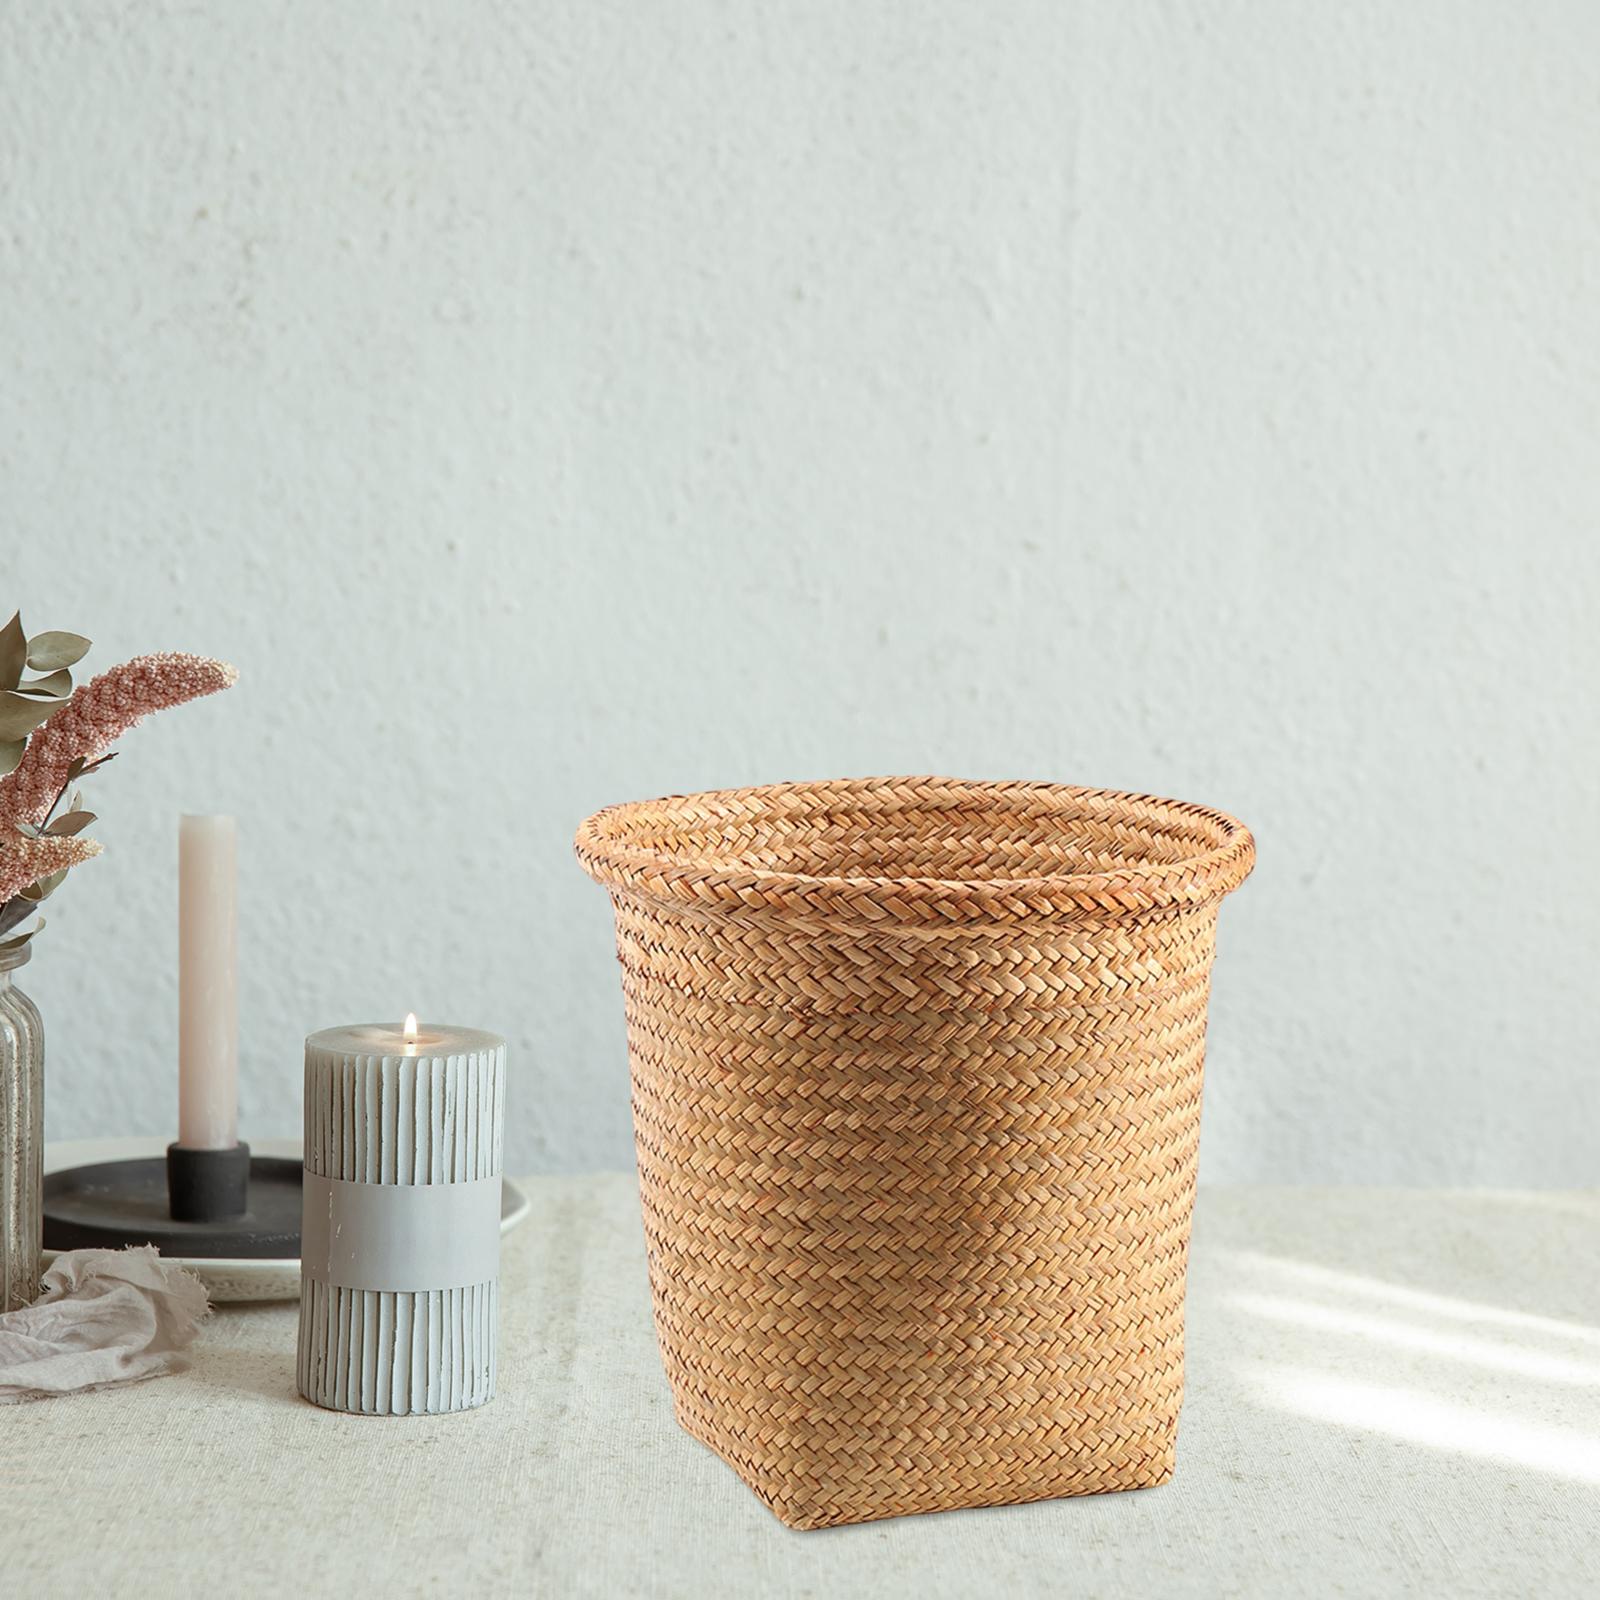 Storage Plant Pots Towels Nursery Balcony Garden Home Woven Straw Baskets Wood